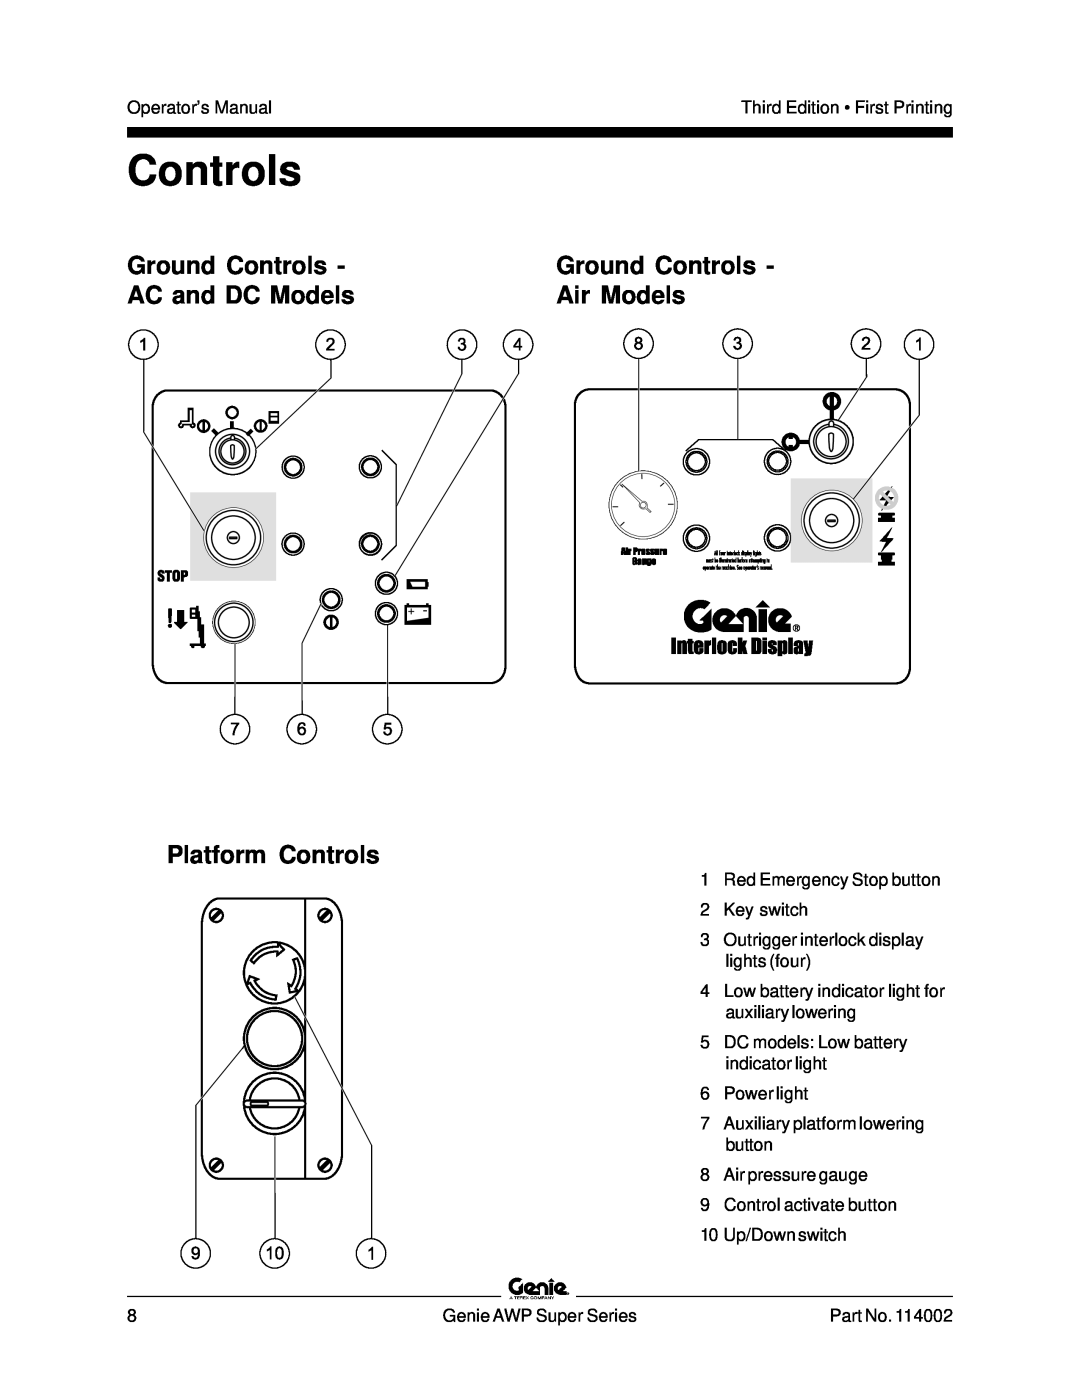 Genie 114002 manual Ground Controls, AC and DC Models, Air Models, Platform Controls 